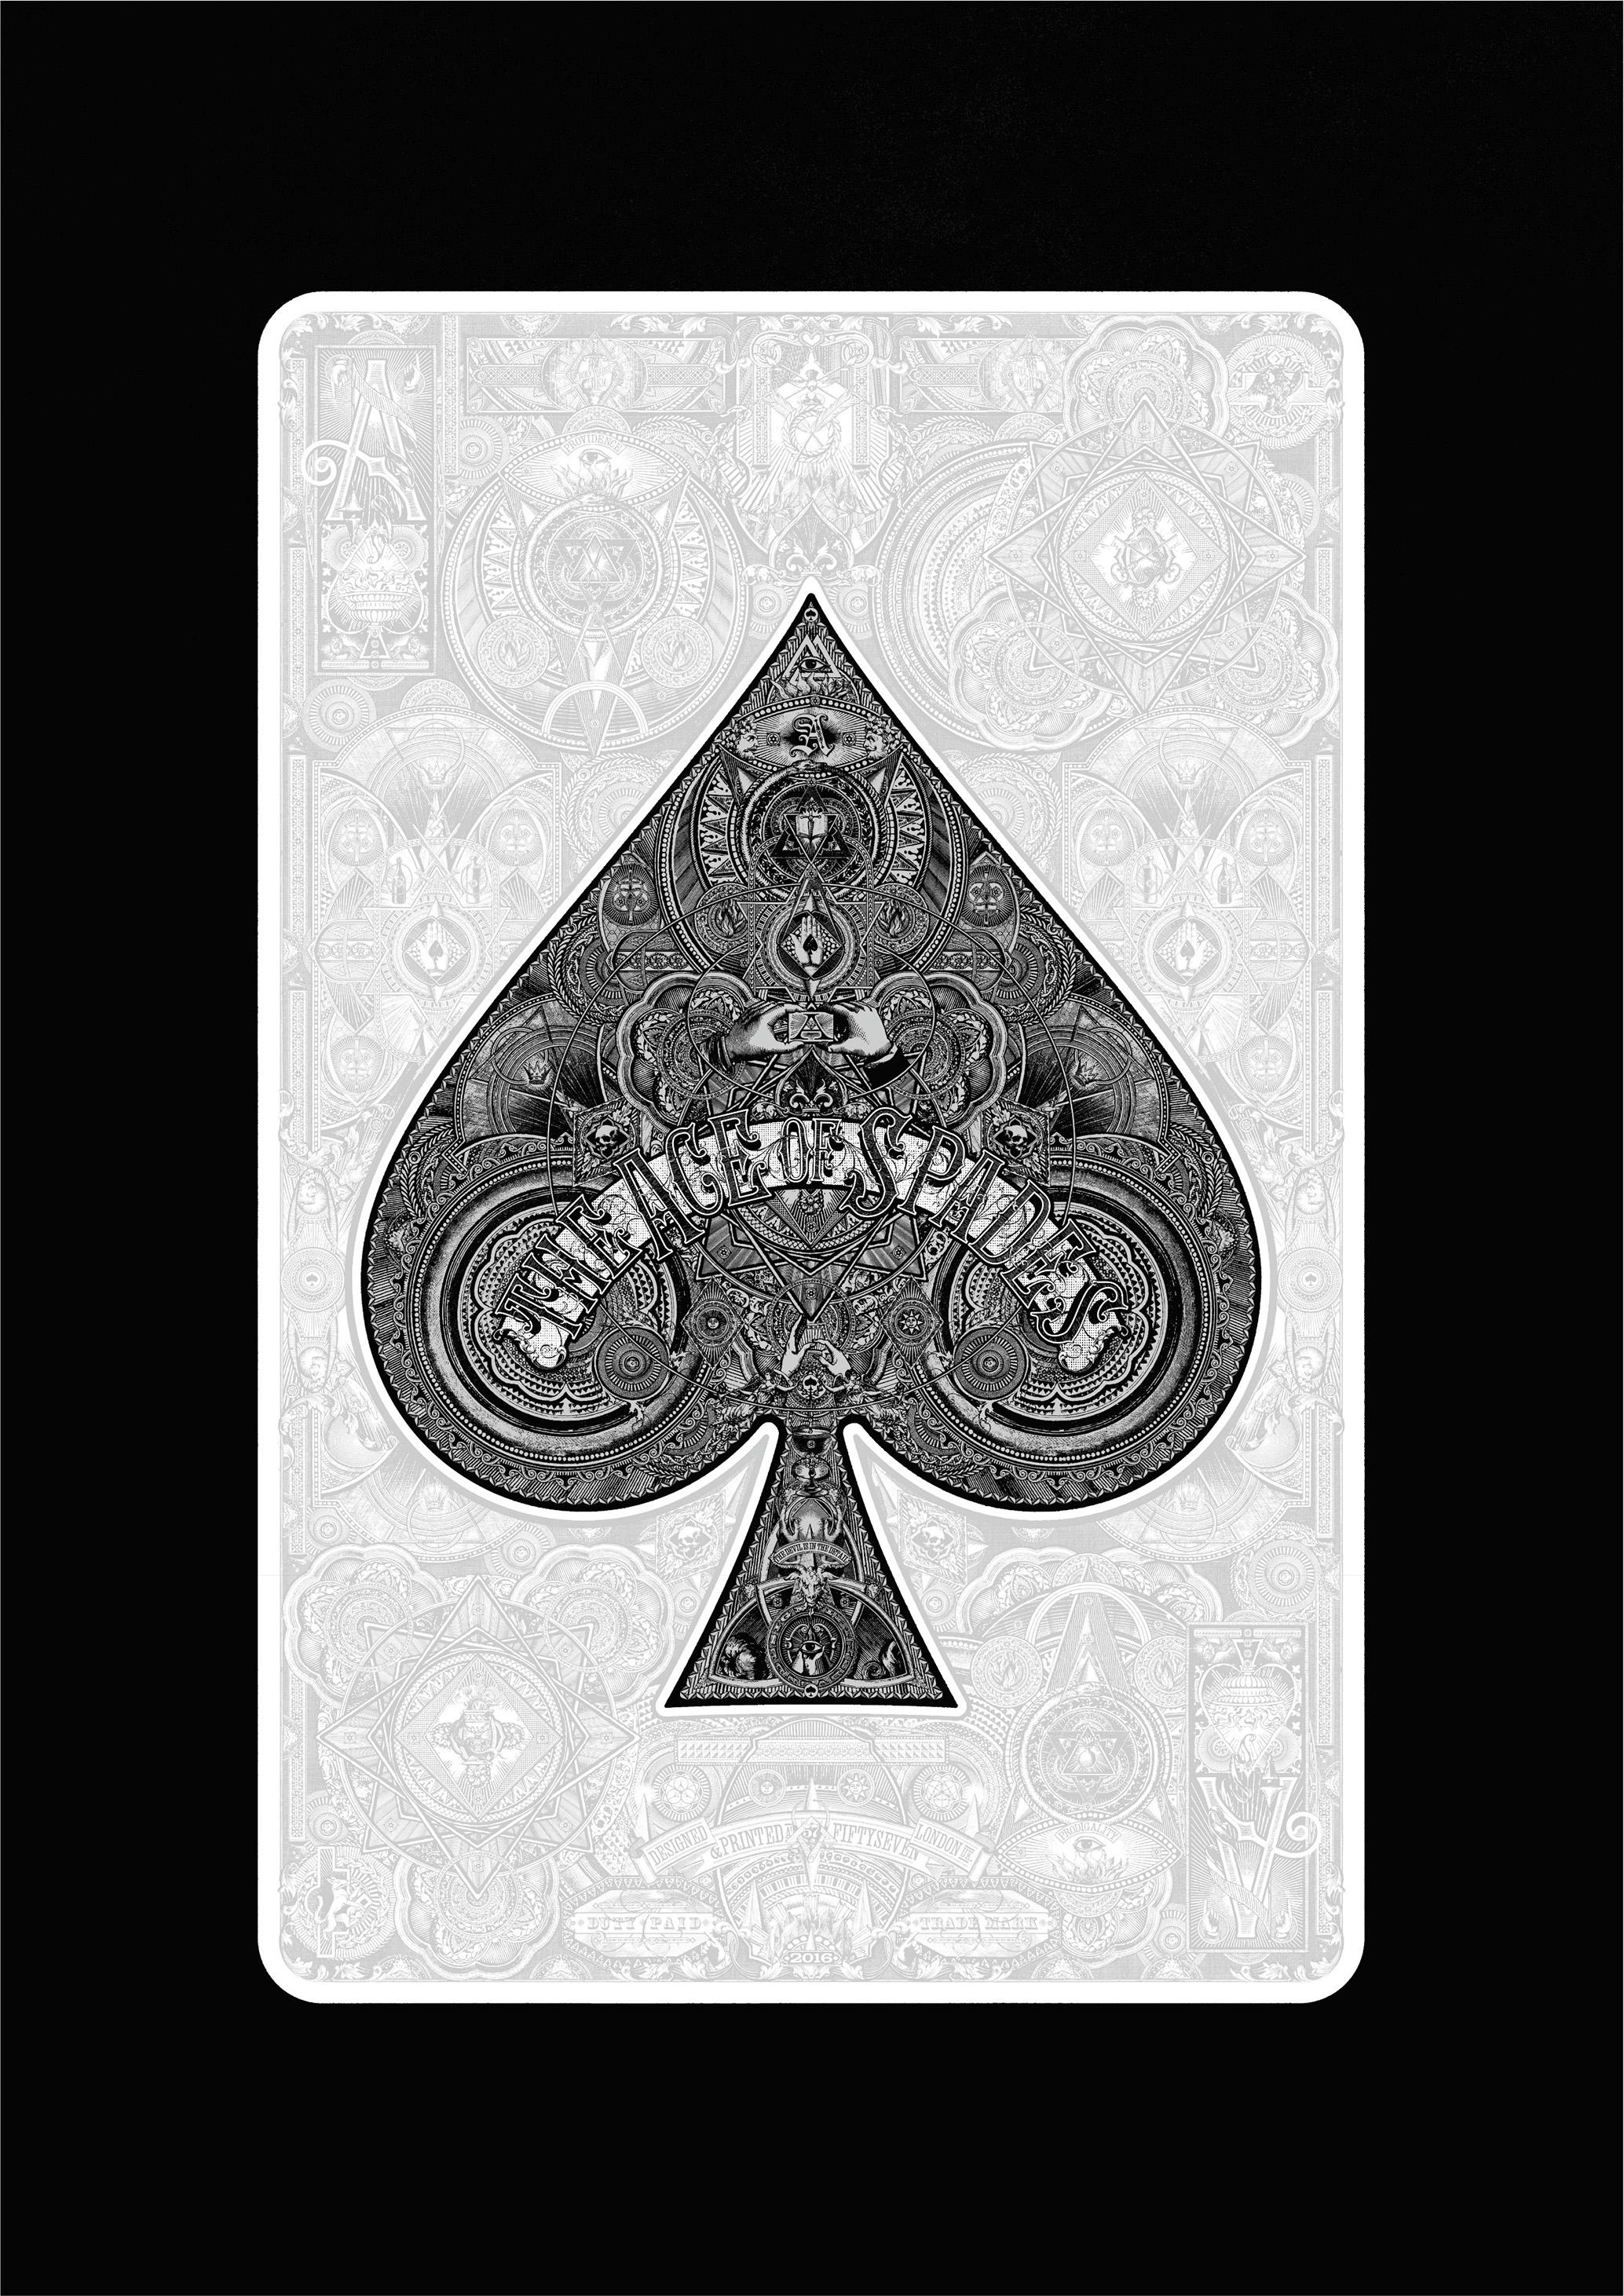 Ace of spades II